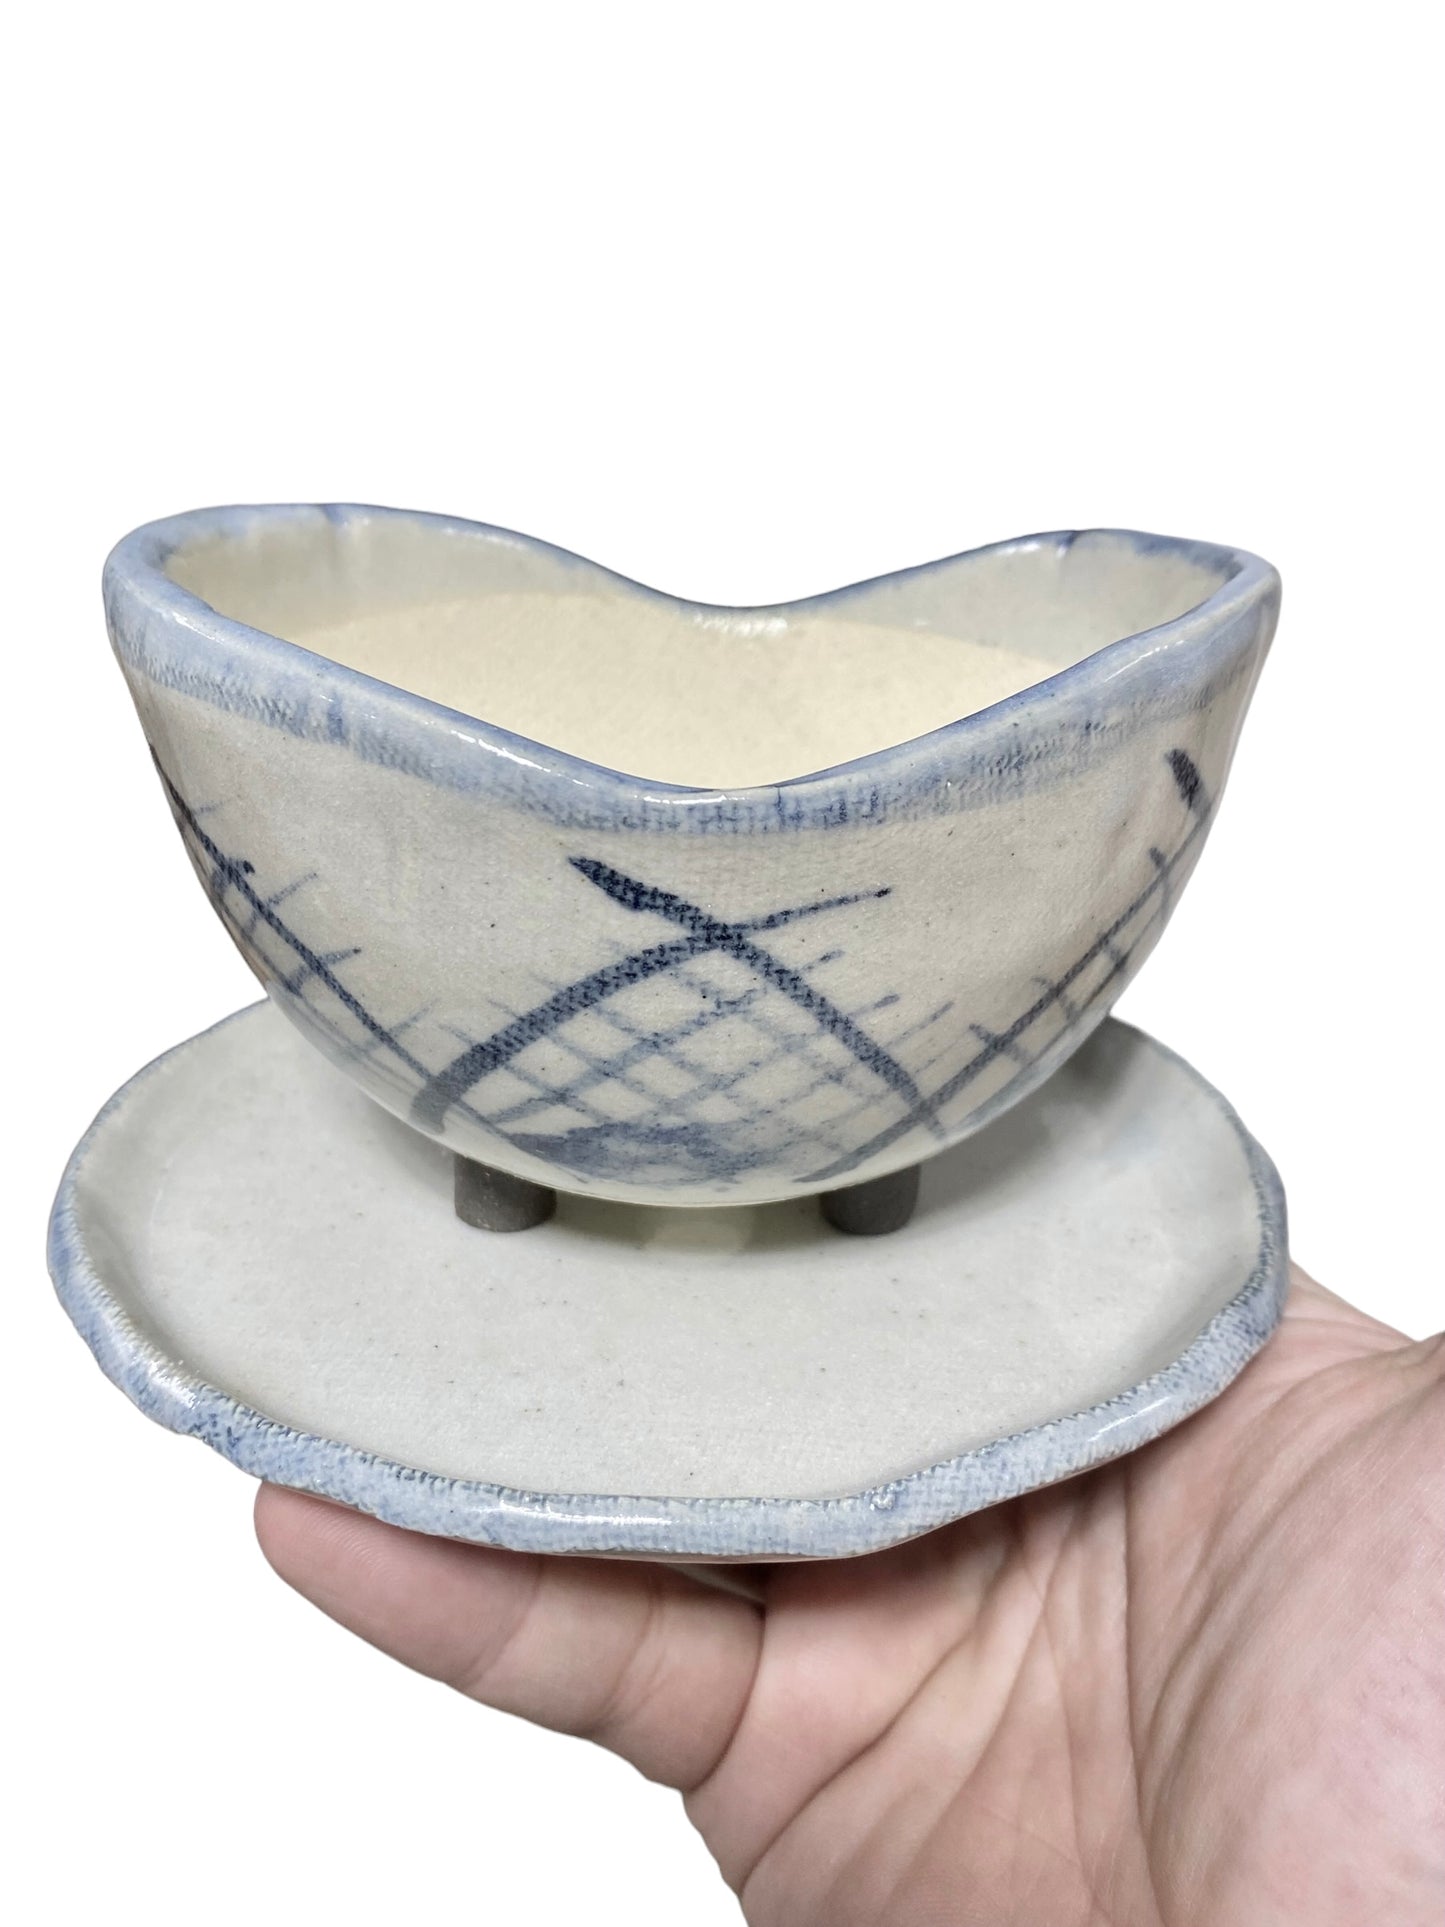 Nanpei - Glazed Footed Bowl Bonsai Pot and Tray Set